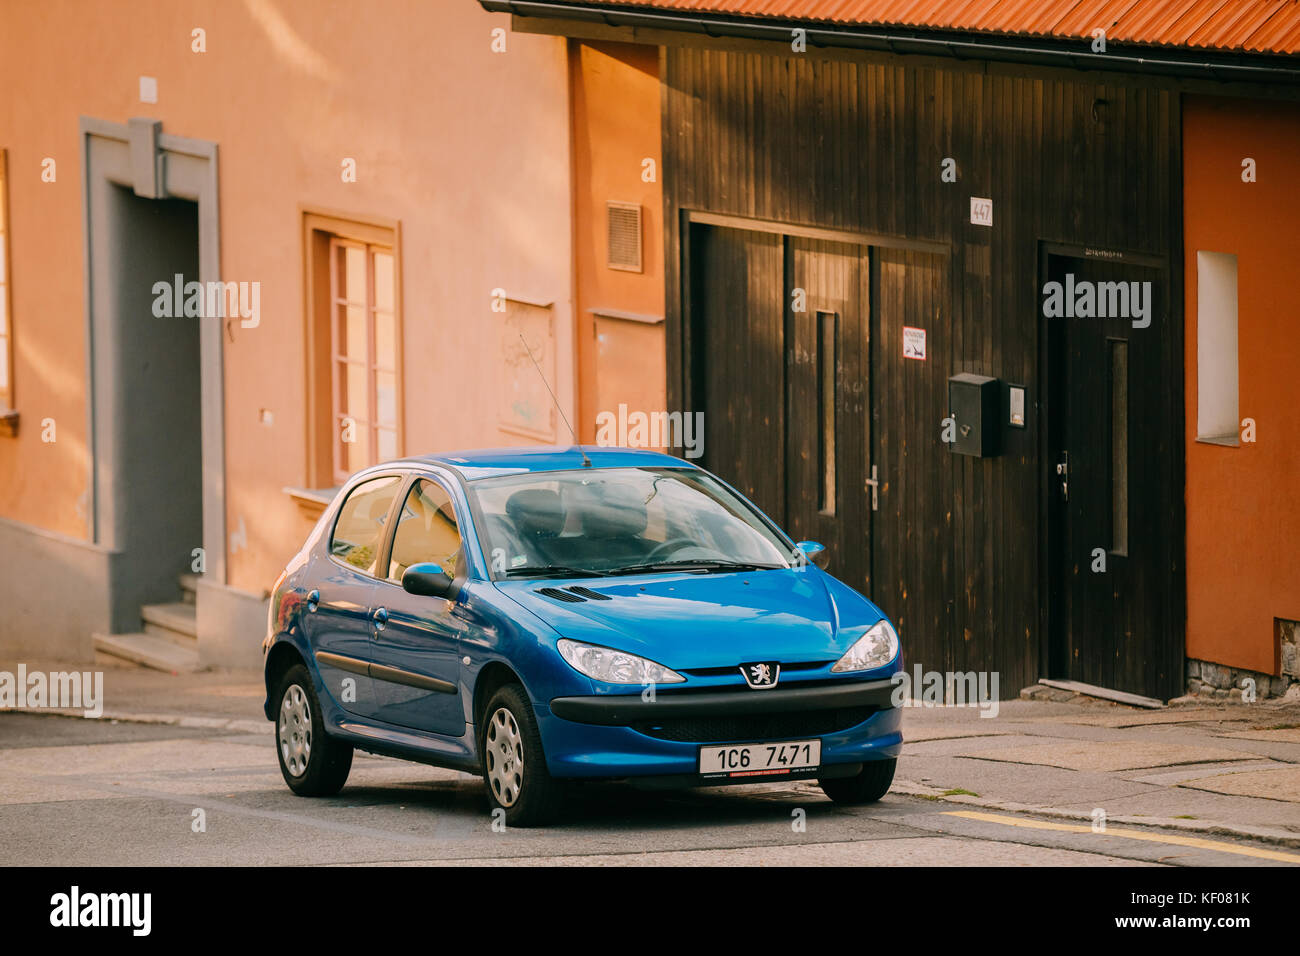 Cesky Krumlov, Czech Republic - September 26, 2017: Blue Color Peugeot 206 Parking On Street Stock Photo